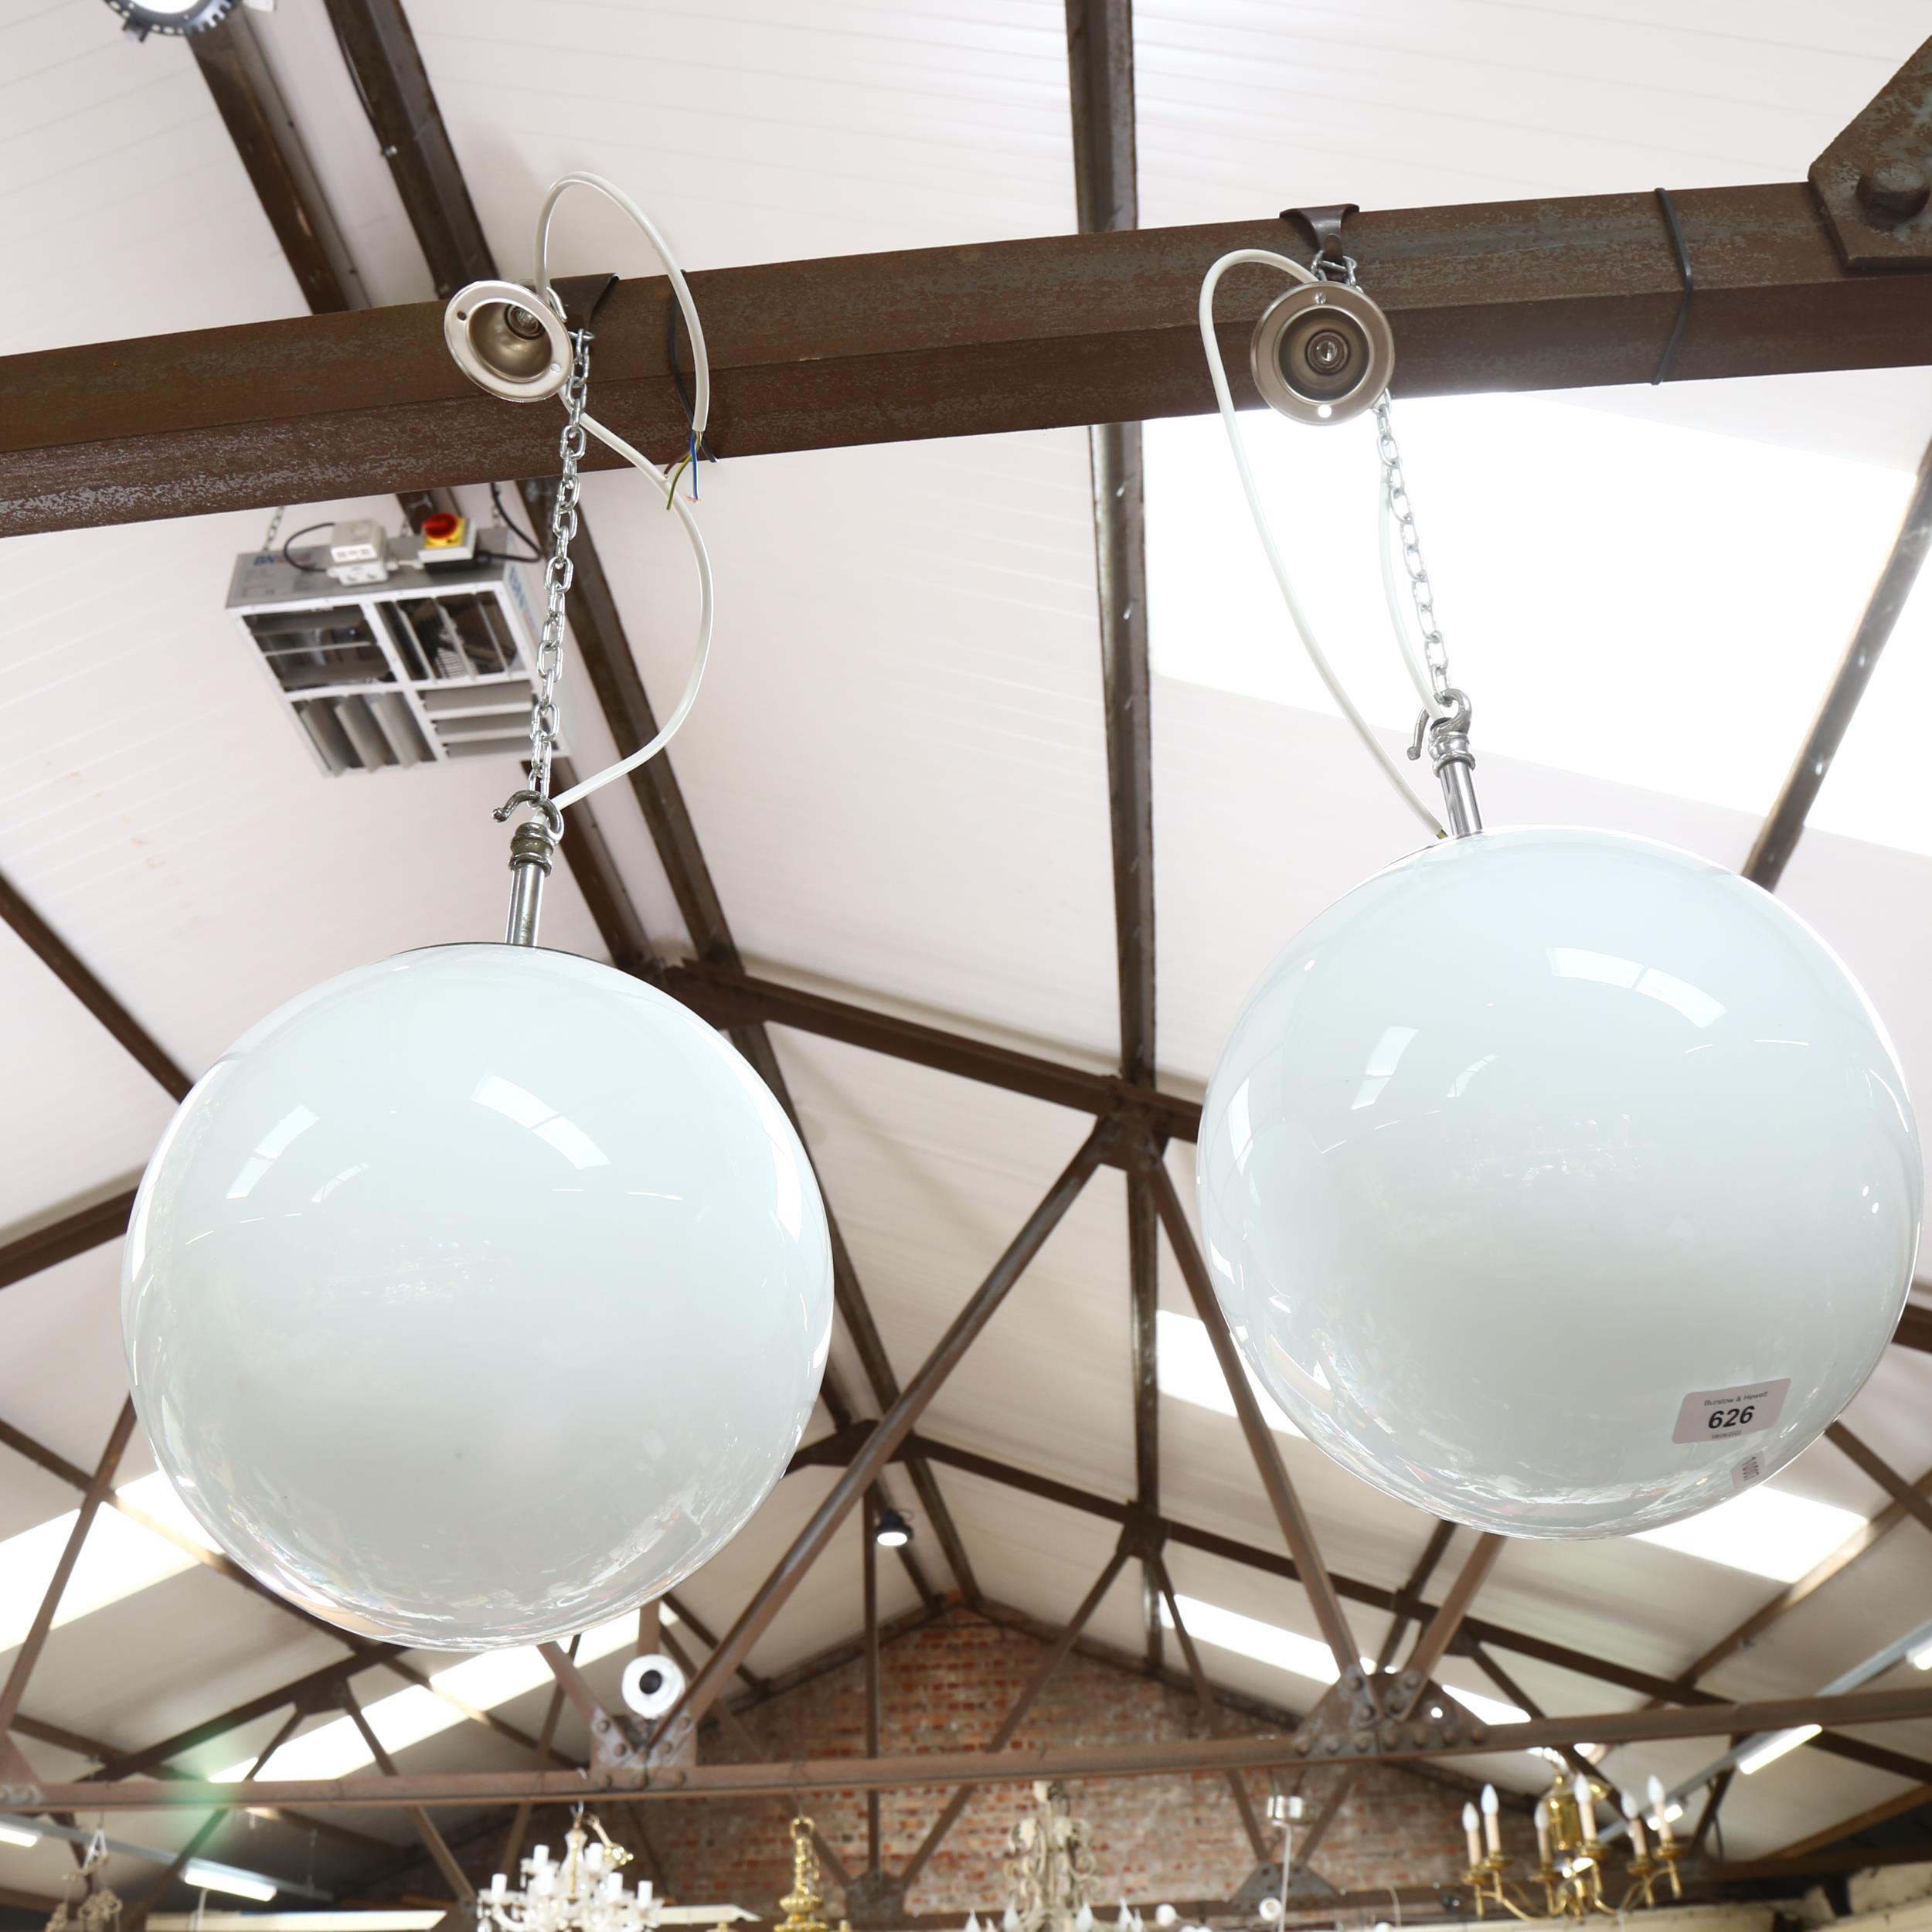 A pair of milk glass globular pendant light fittings, diameter 22cm